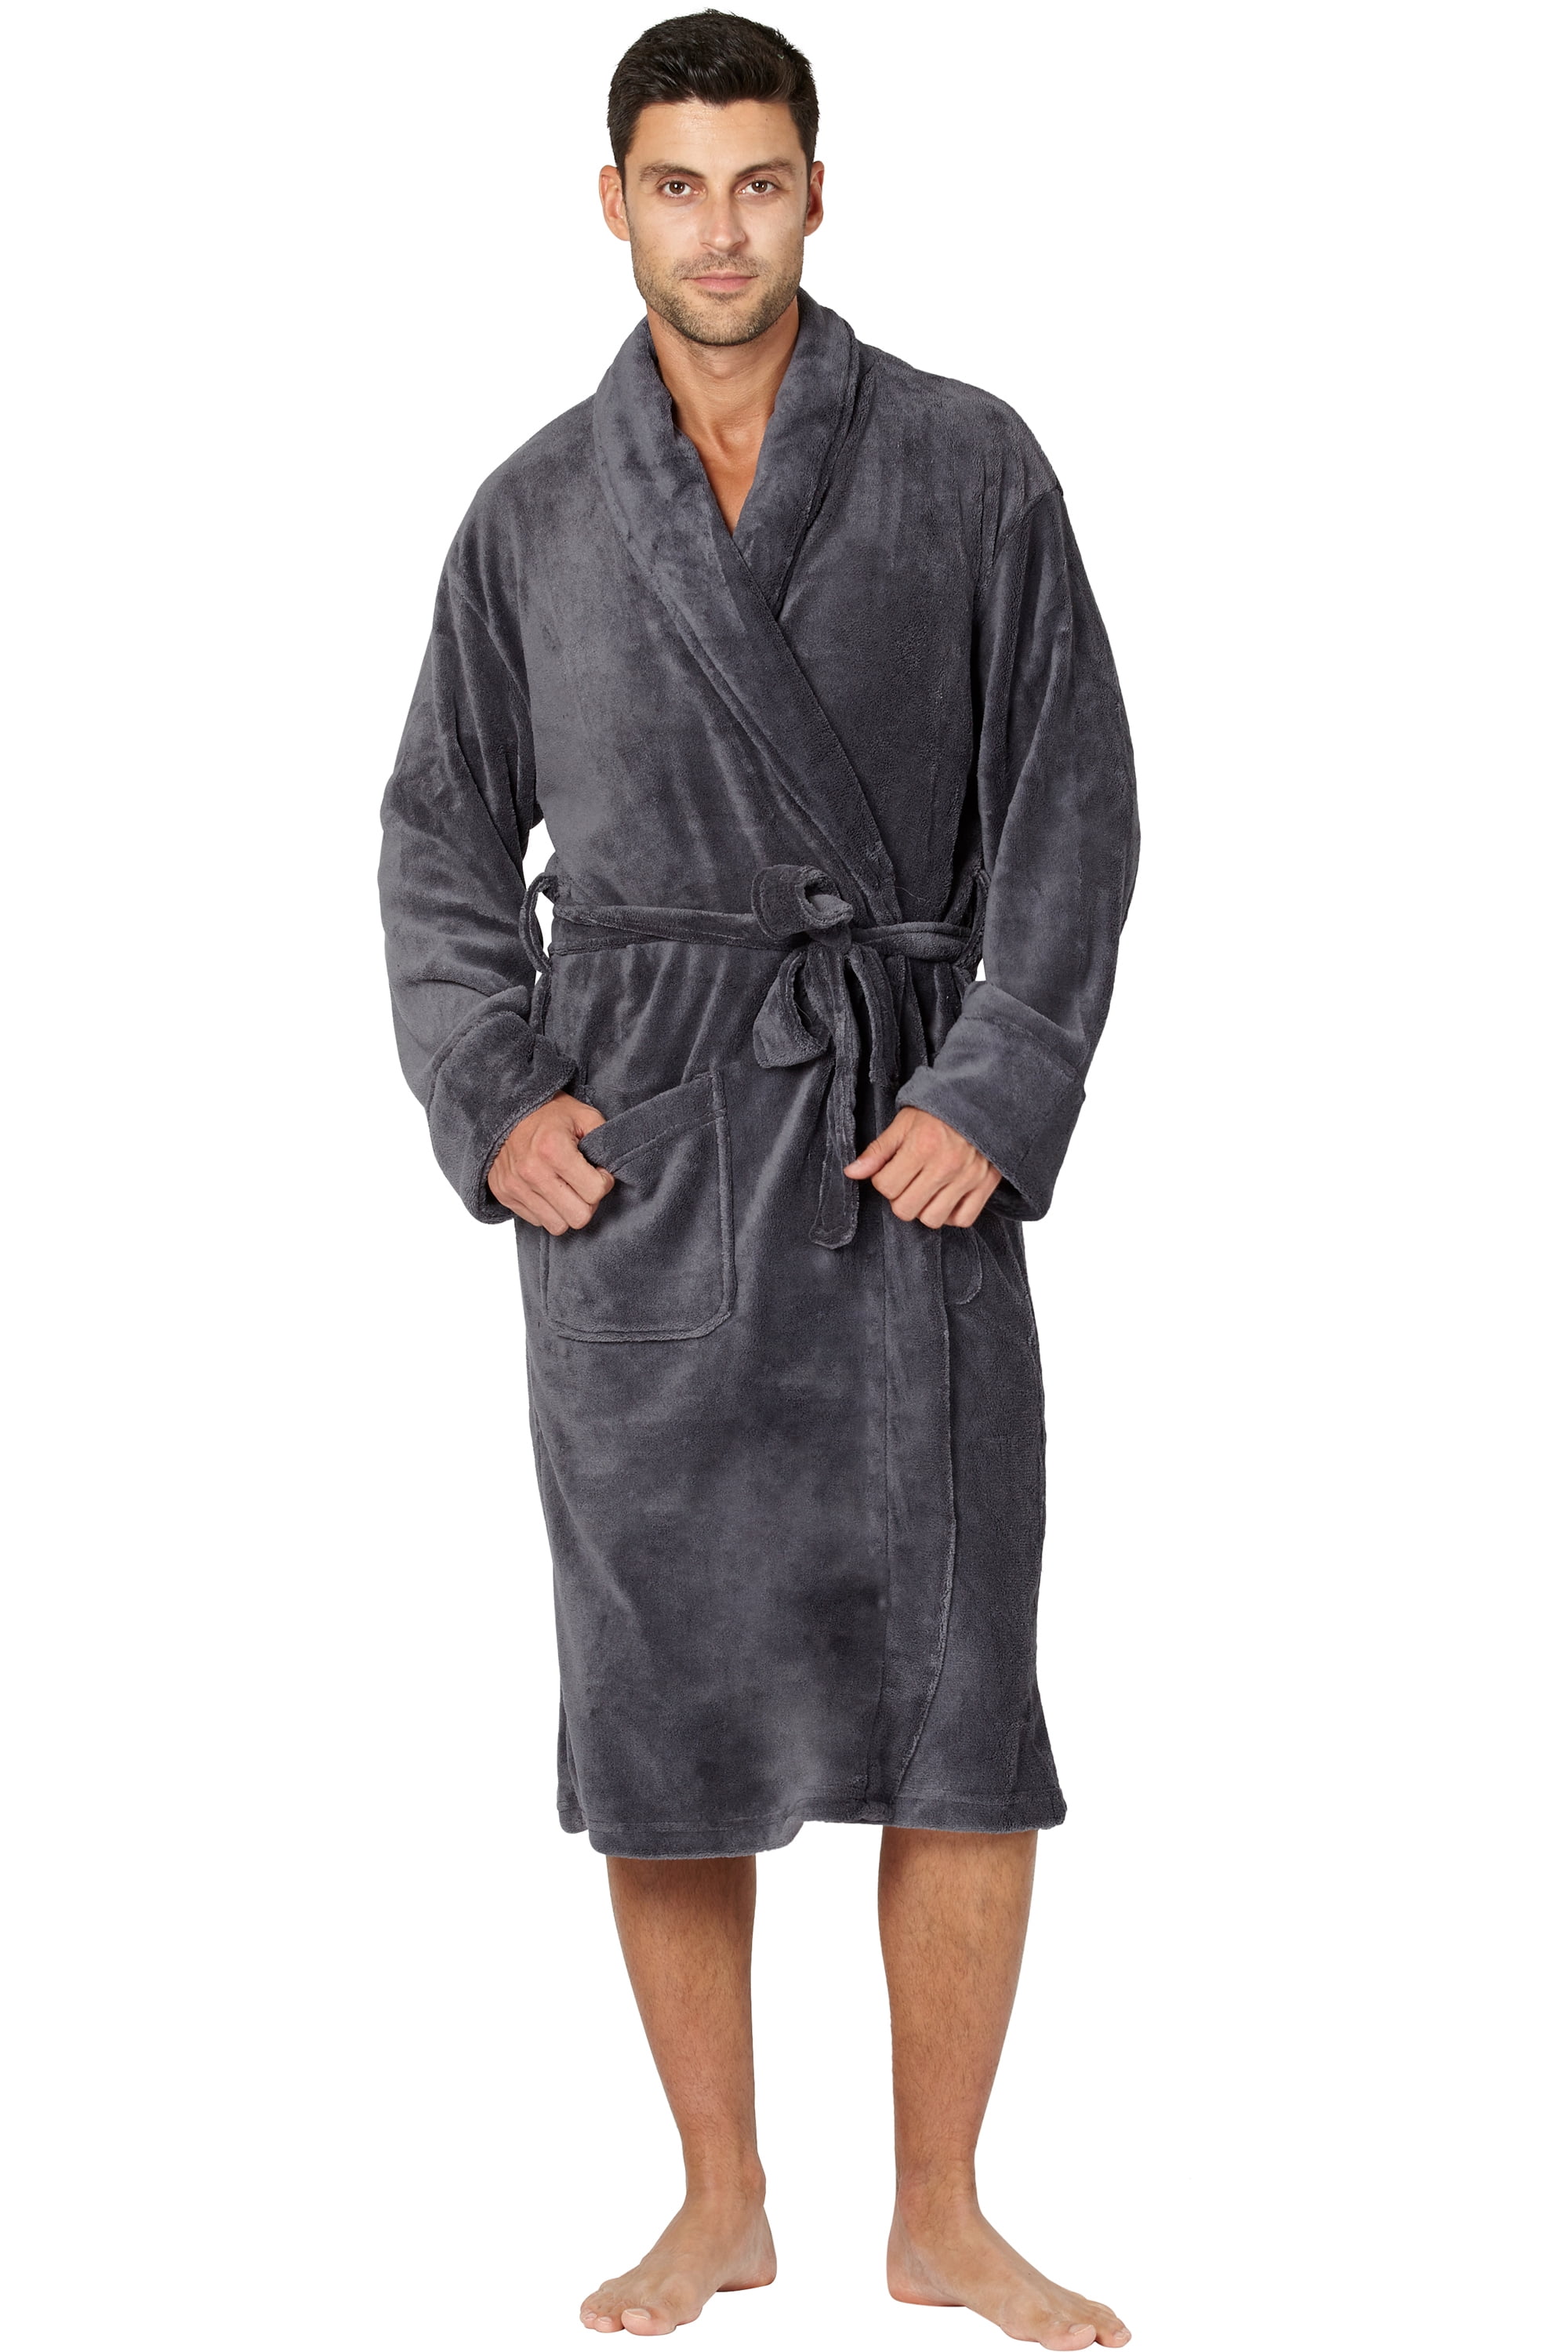 Mens Cozy Plush Fleece Robe, Oxford Grey, Large/X-Large - Walmart.com